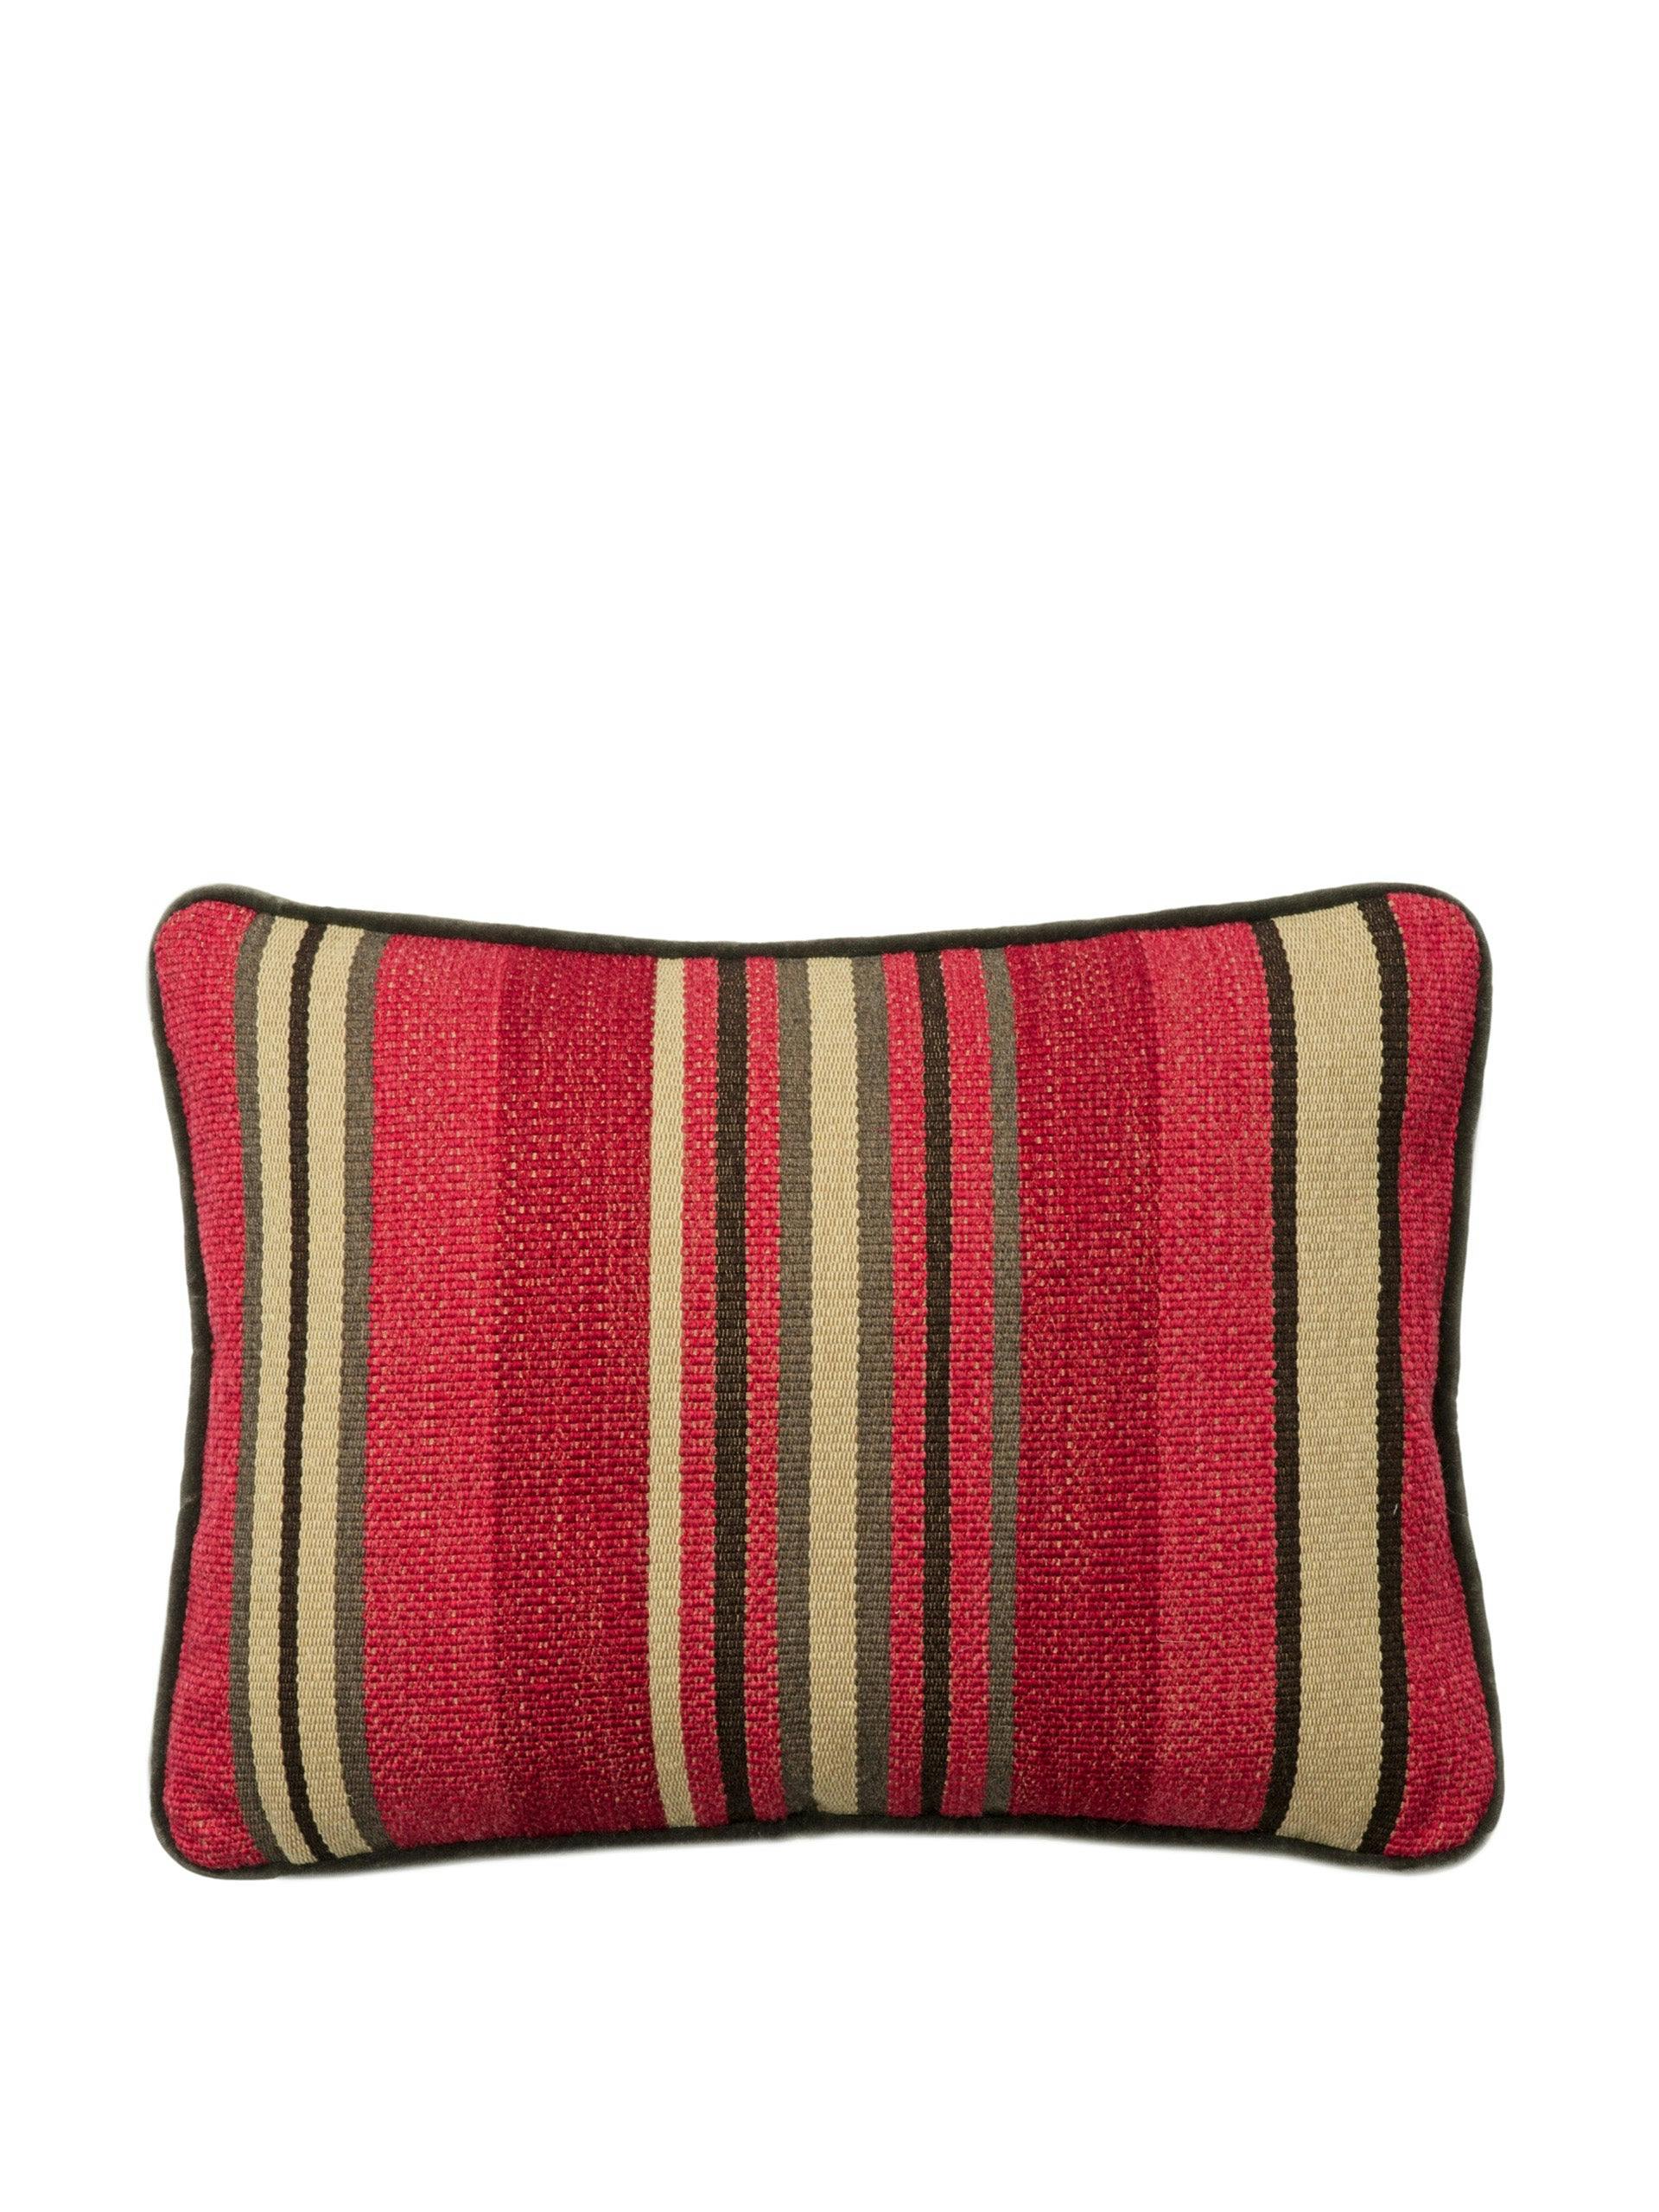 Portscato Plume cushion